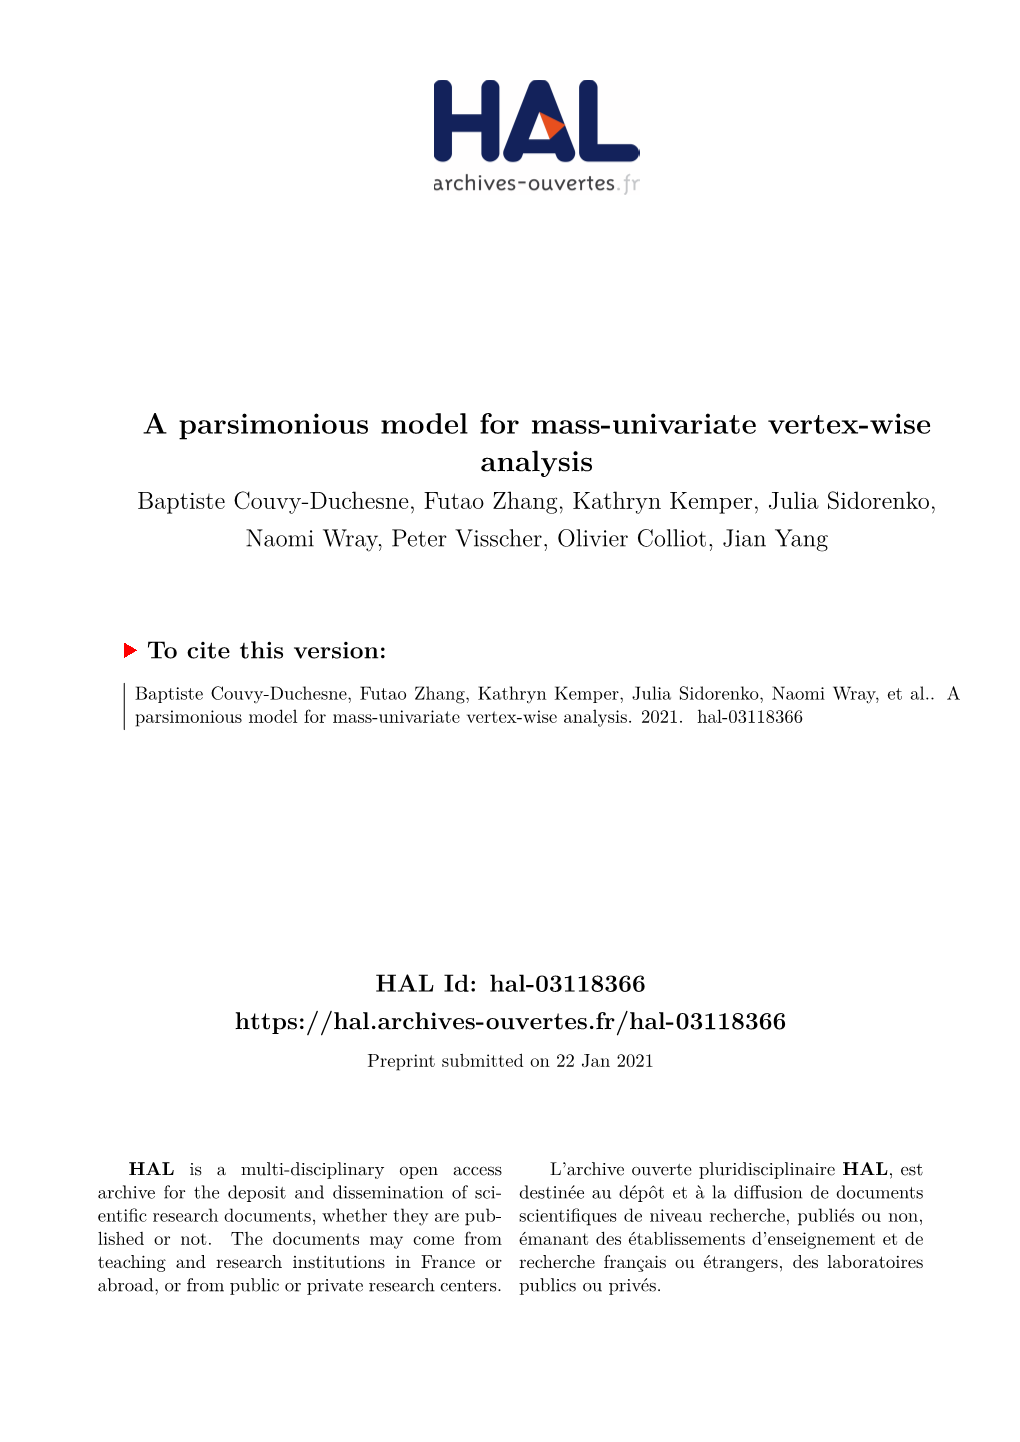 A Parsimonious Model for Mass-Univariate Vertex-Wise Analysis